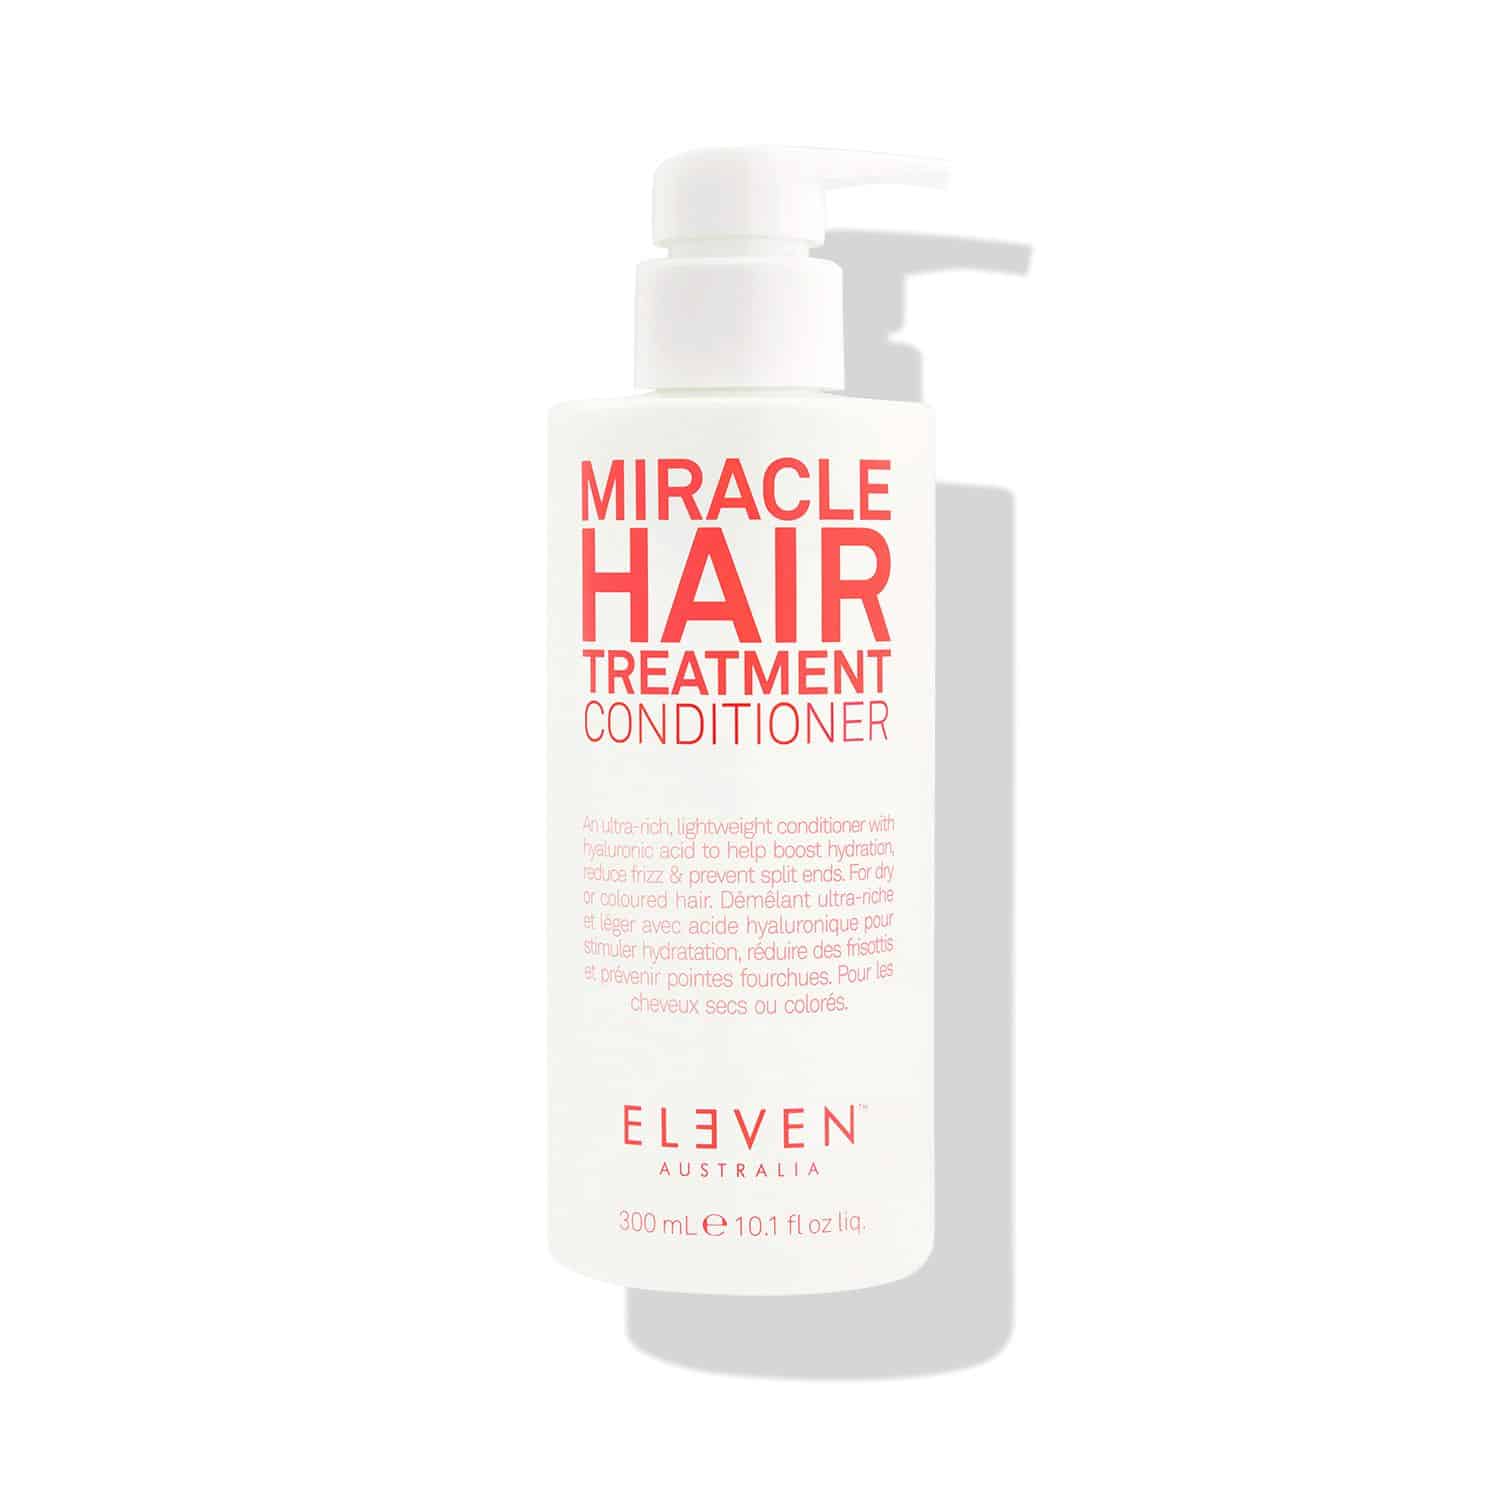 Omslagsbild för “Eleven Miracle Hair treatment conditioner”